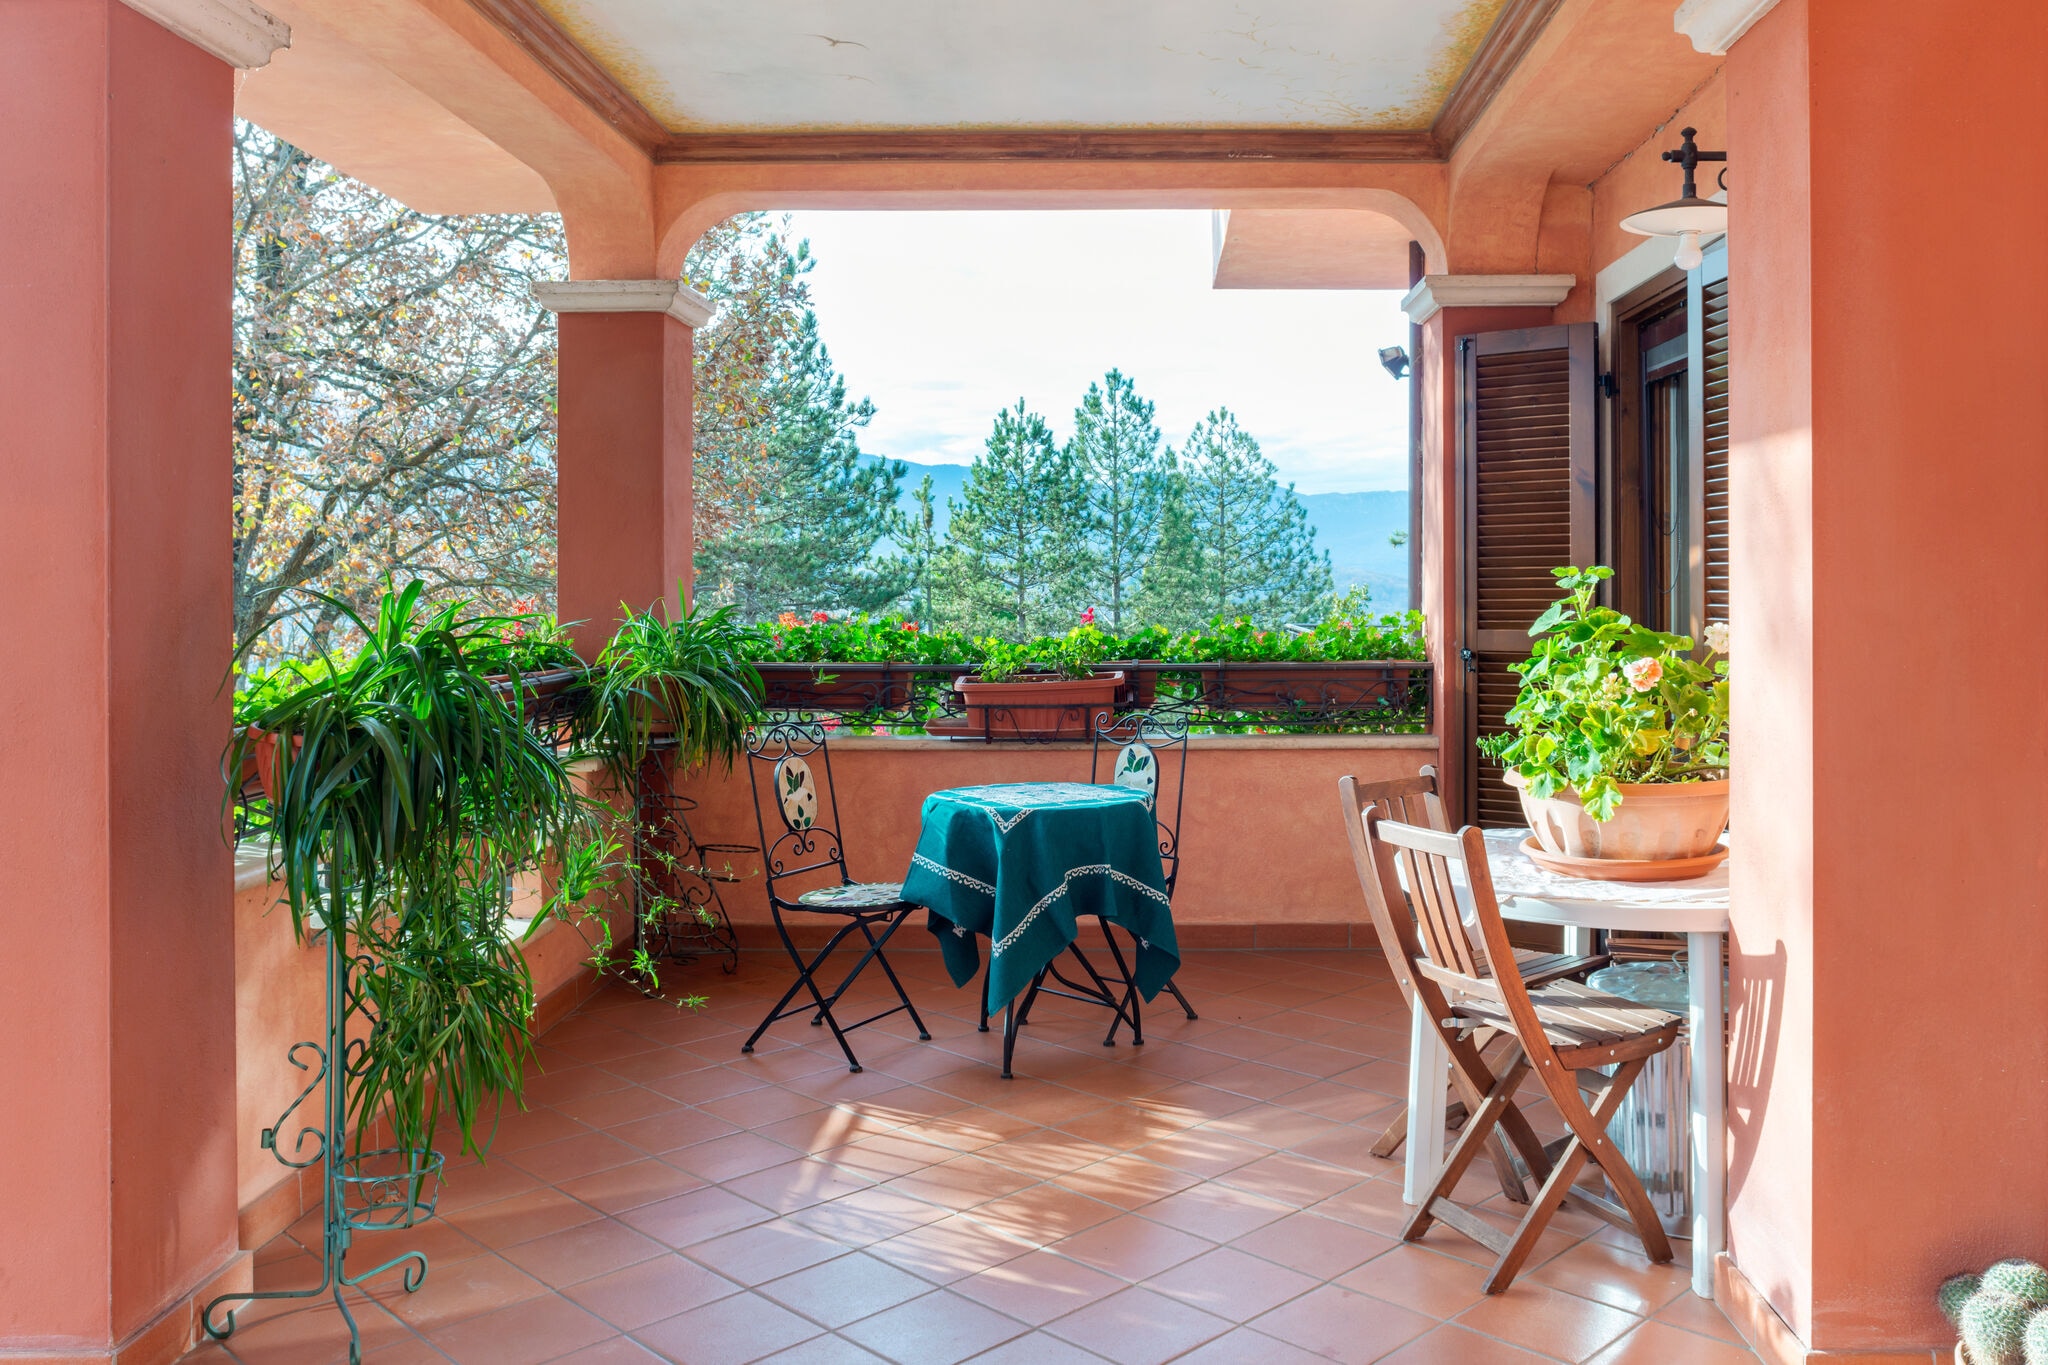 Appartement in villa met tuin en zwembad in Tagliacozzo